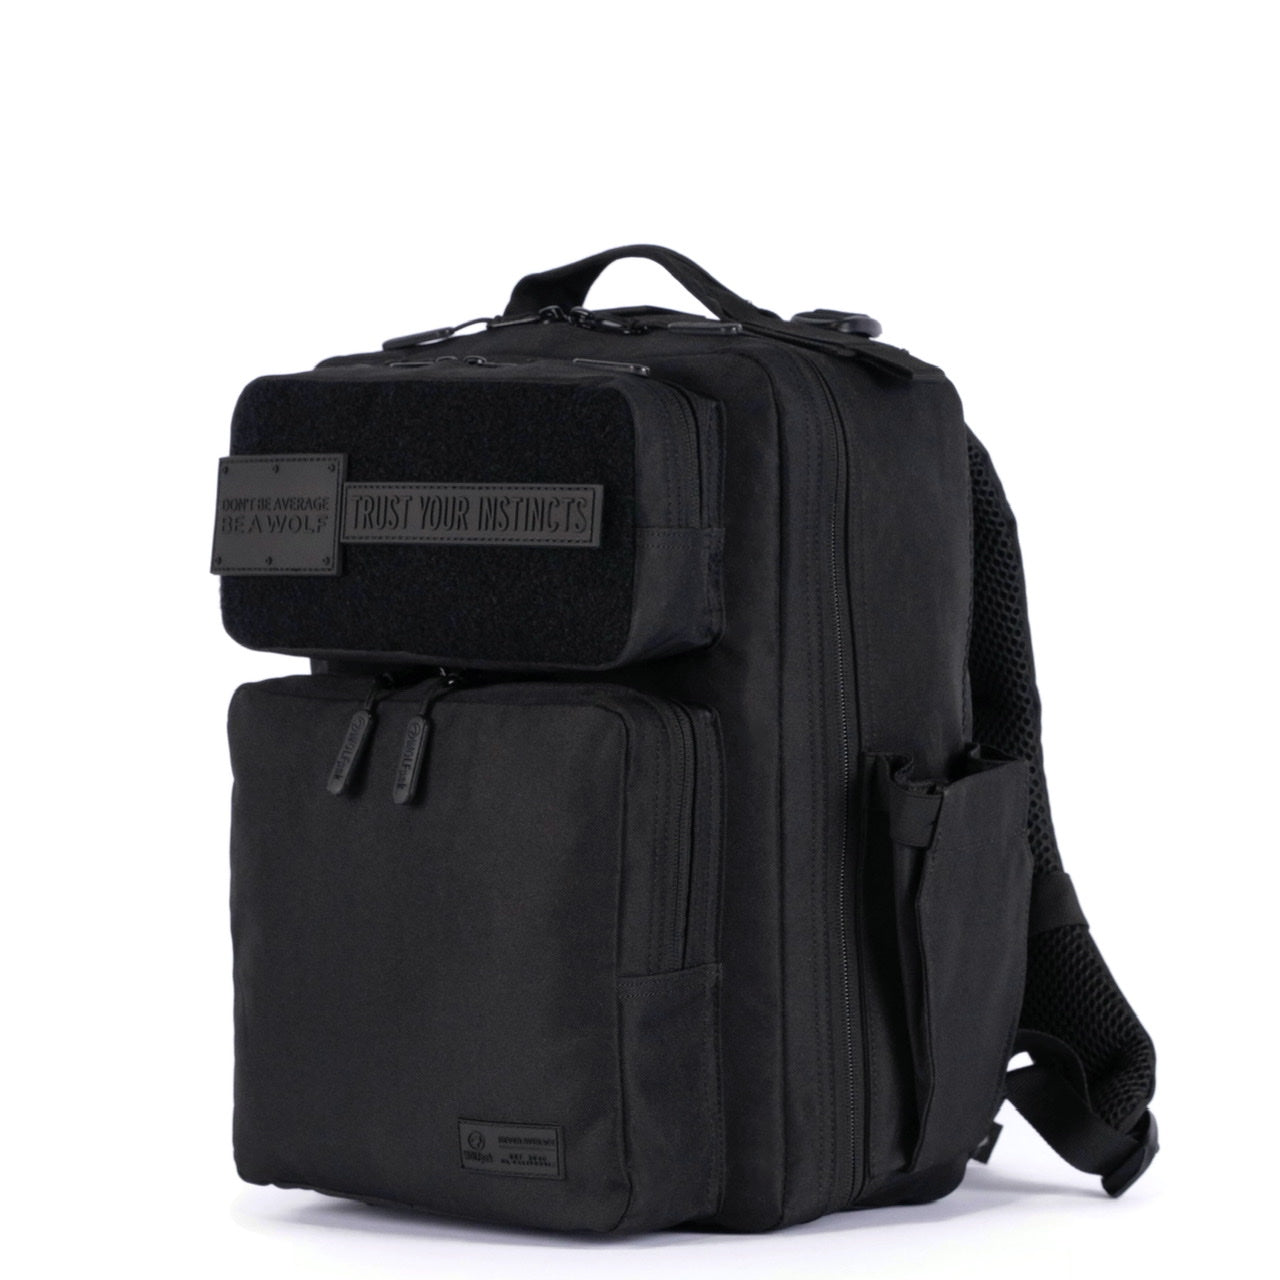 15L Backpack Nightshade